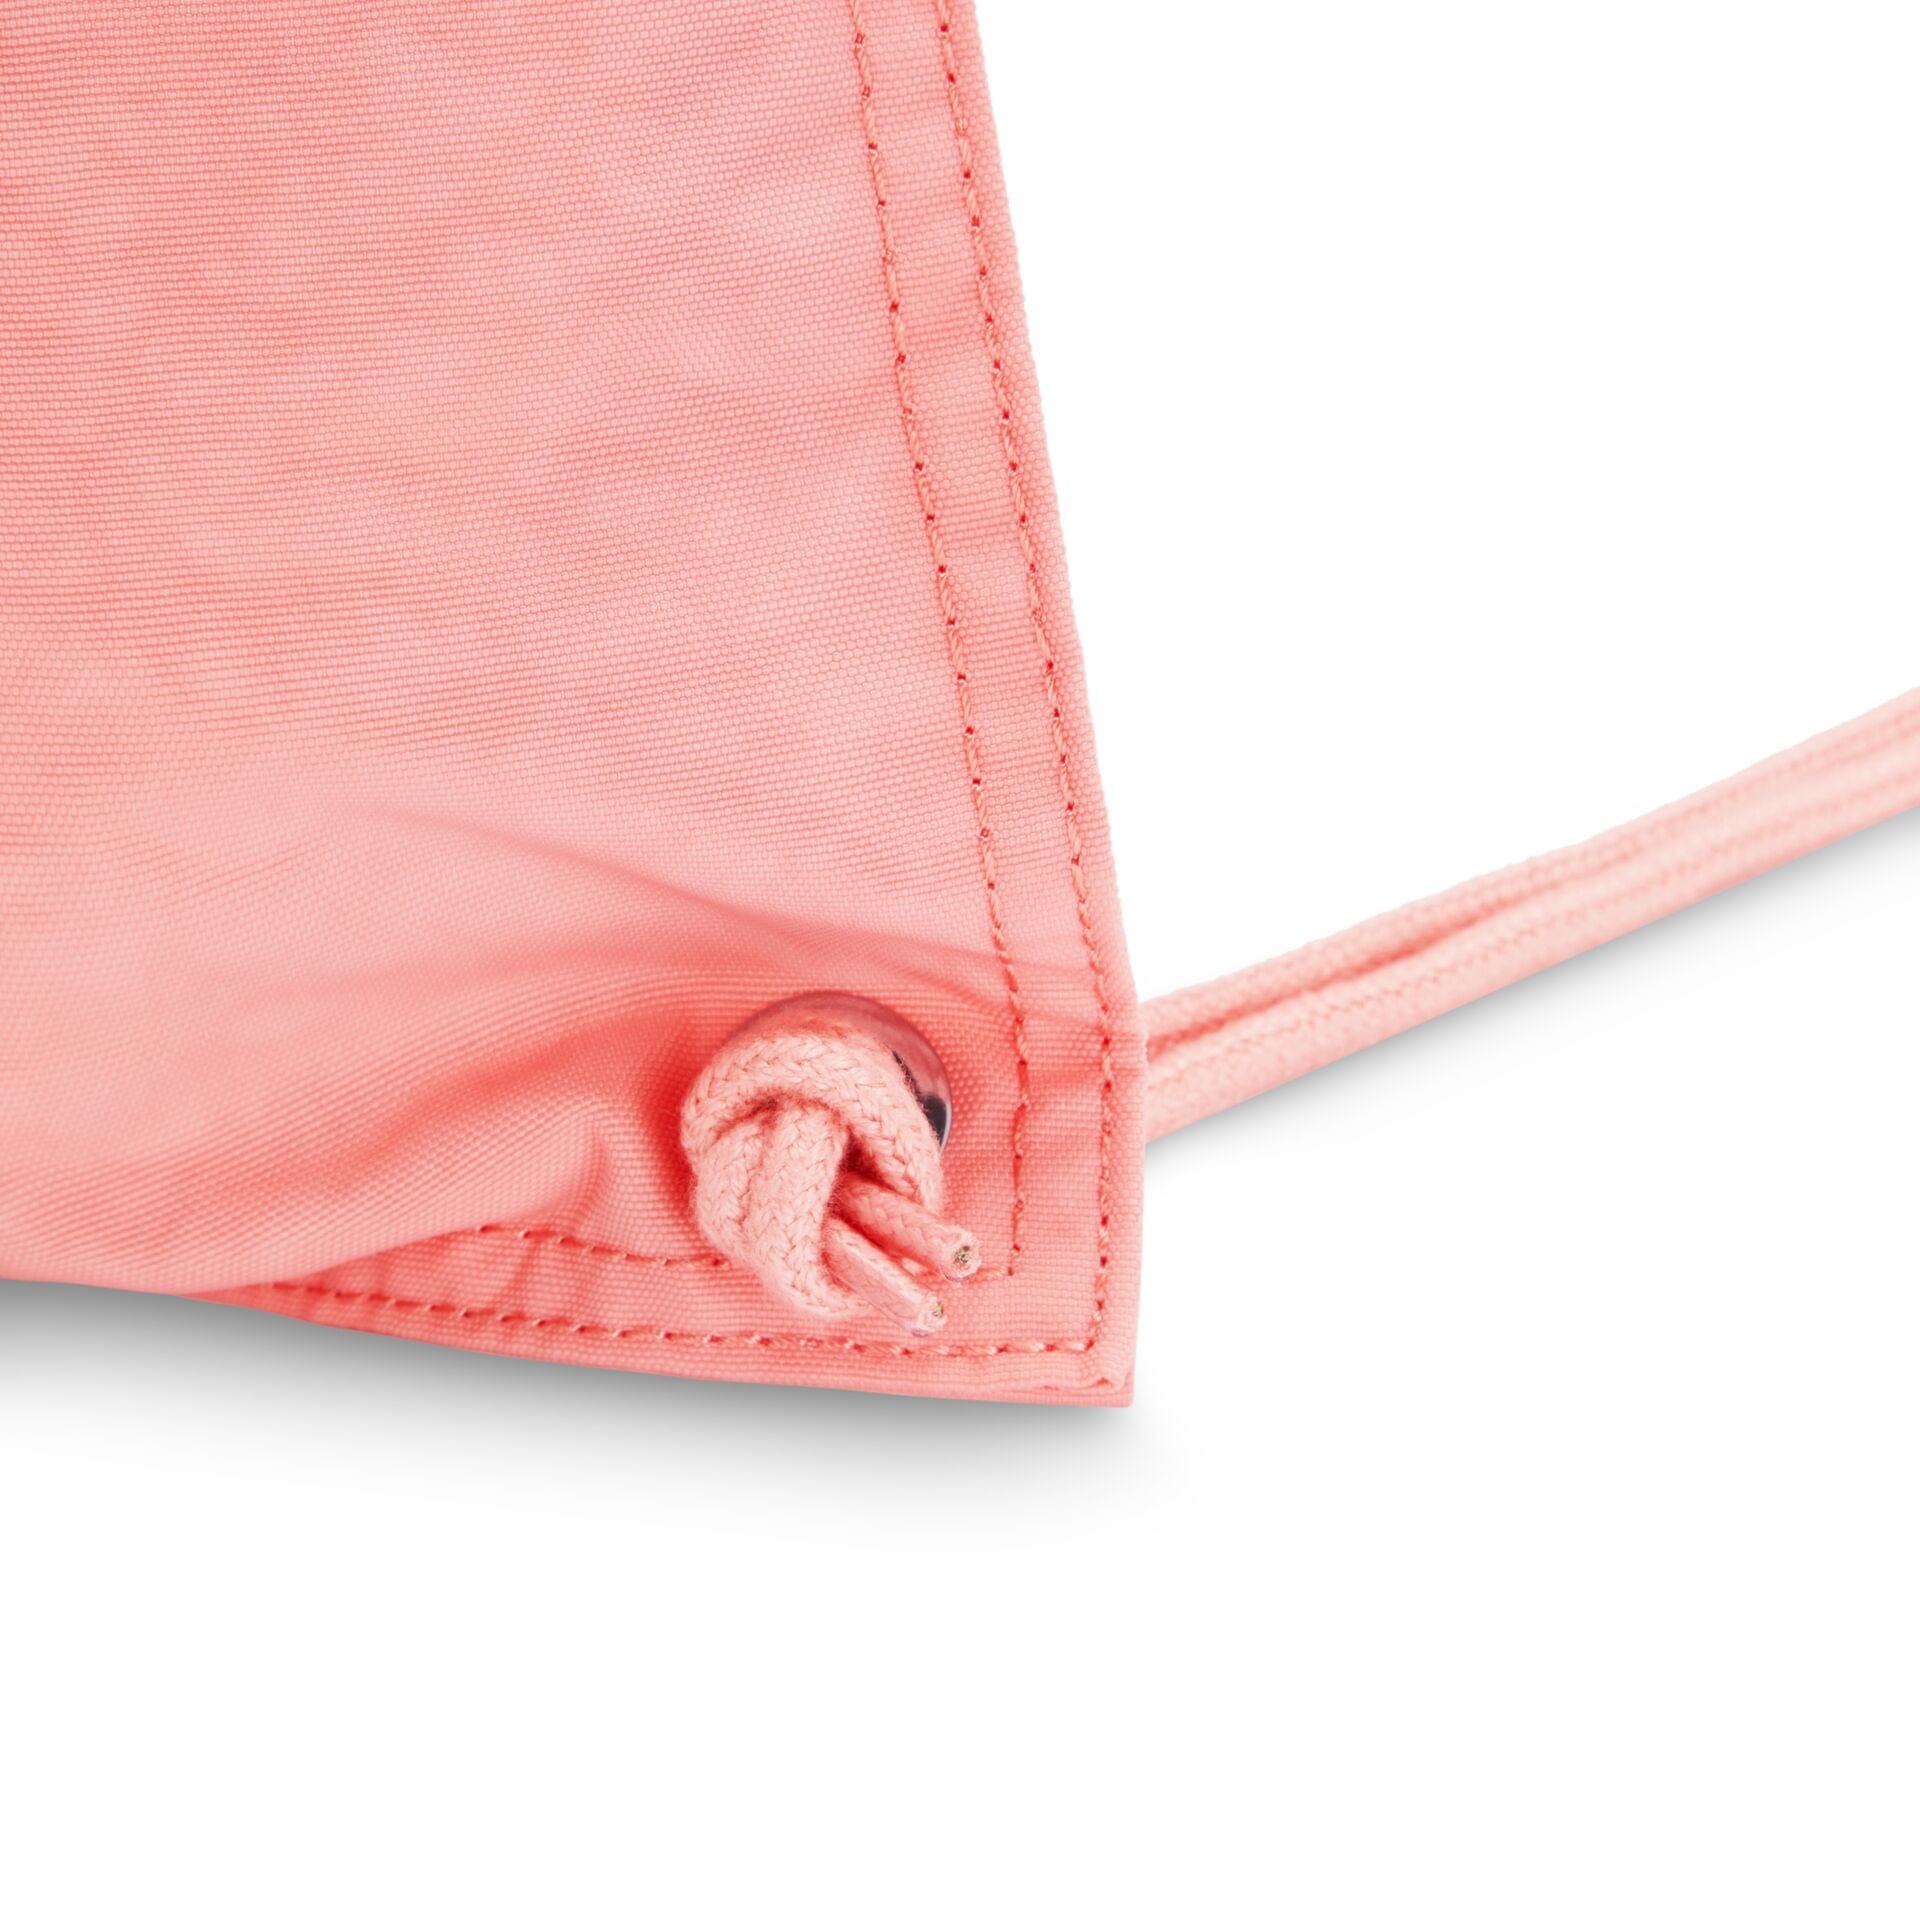 KIPLING-Supertaboo-Medium backpack (with drawstring)-Pink Candy C-09487-R36